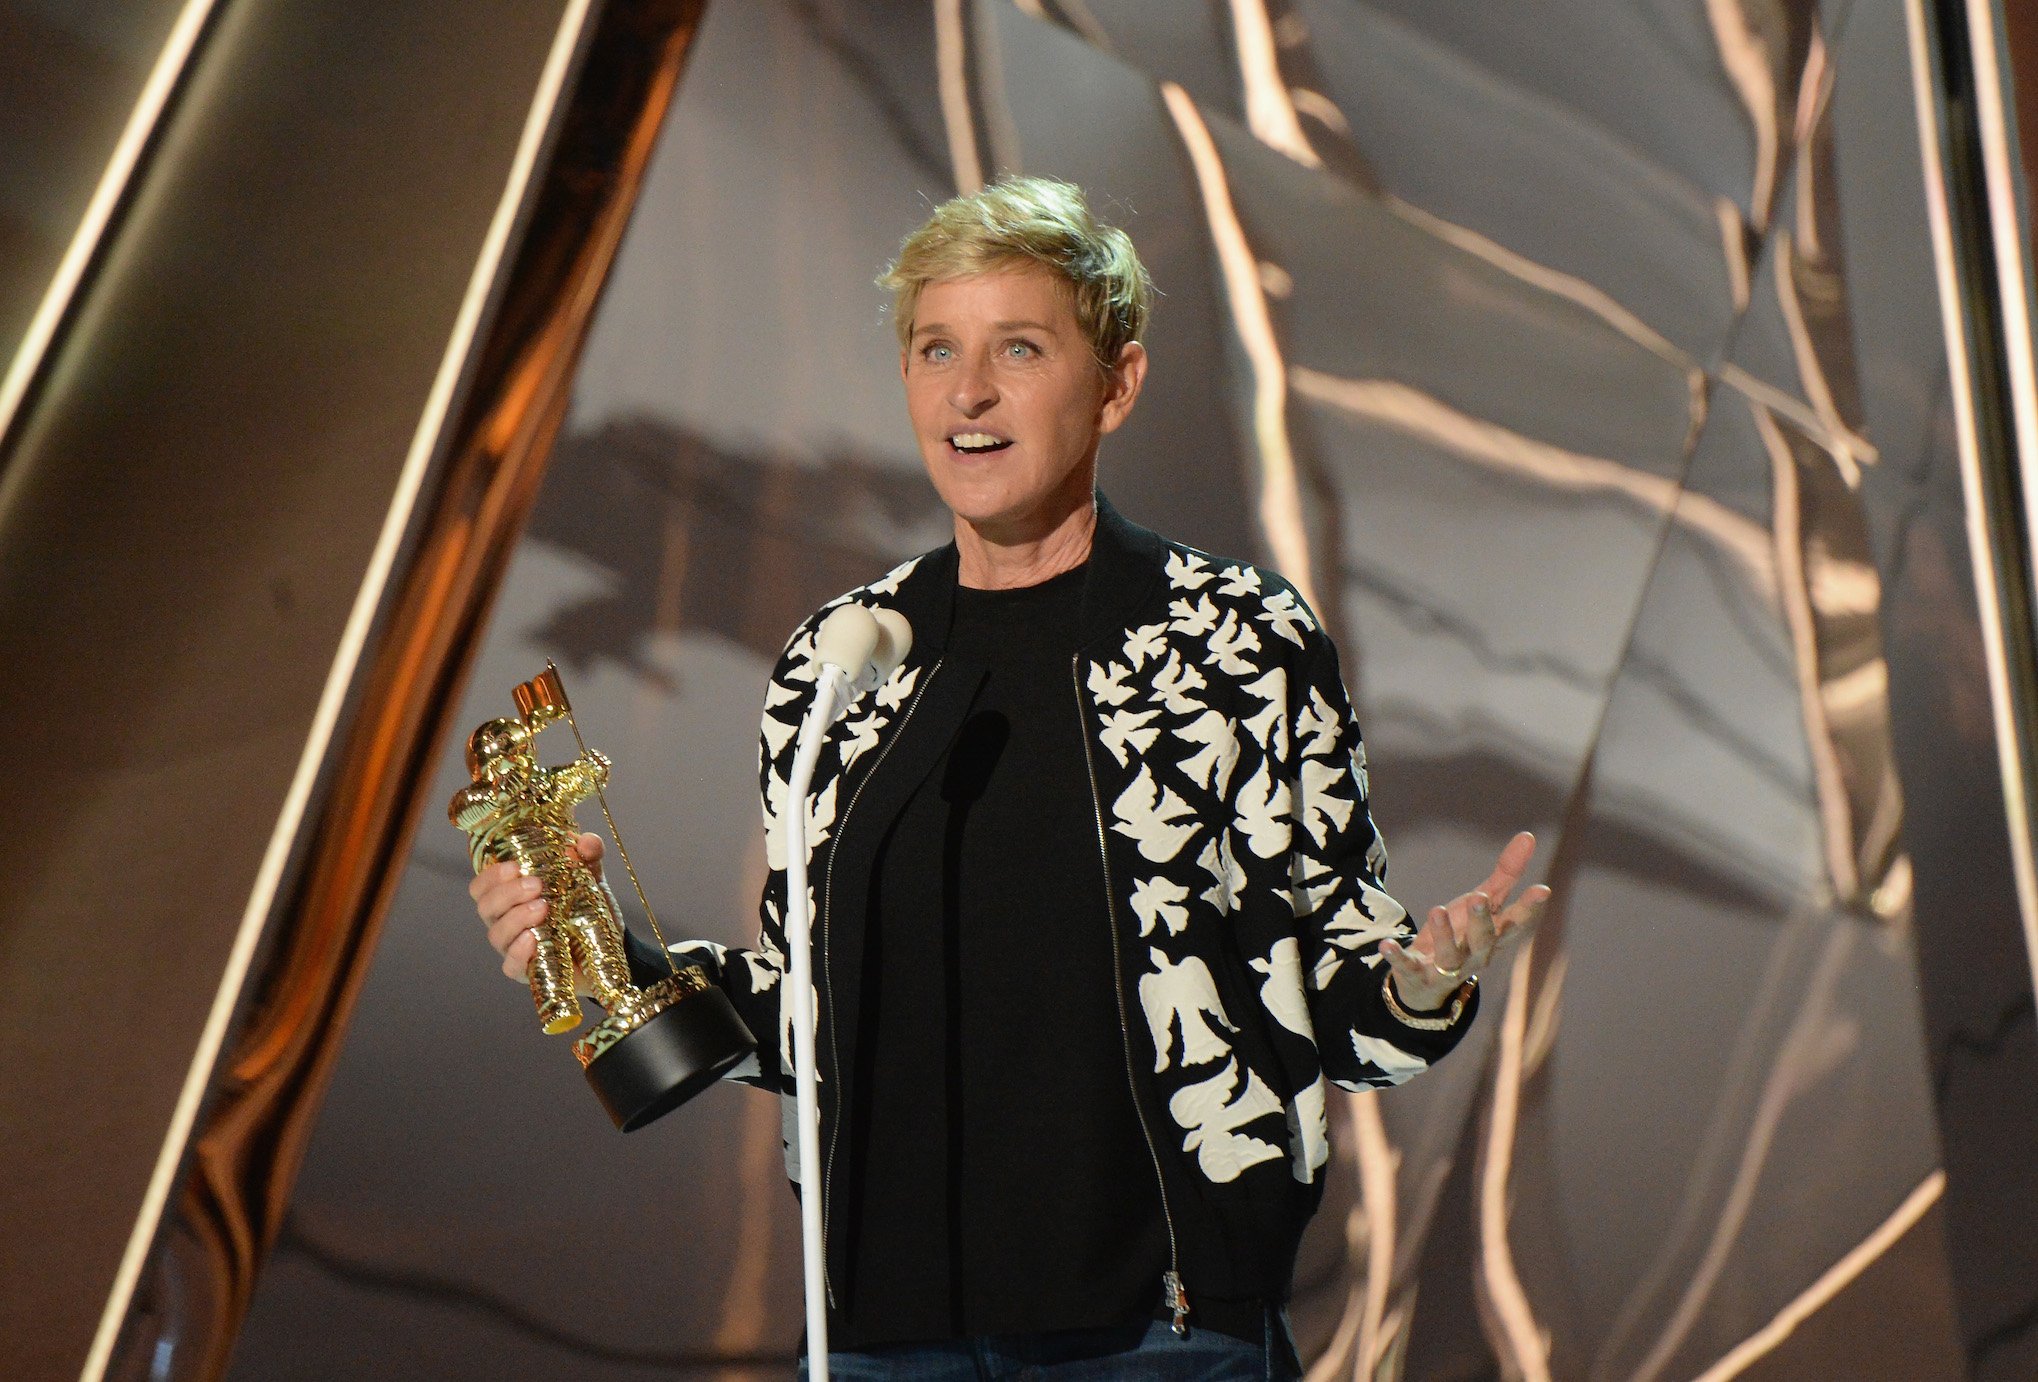 Ellen DeGeneres presents the Michael Jackson Video Vanguard Award